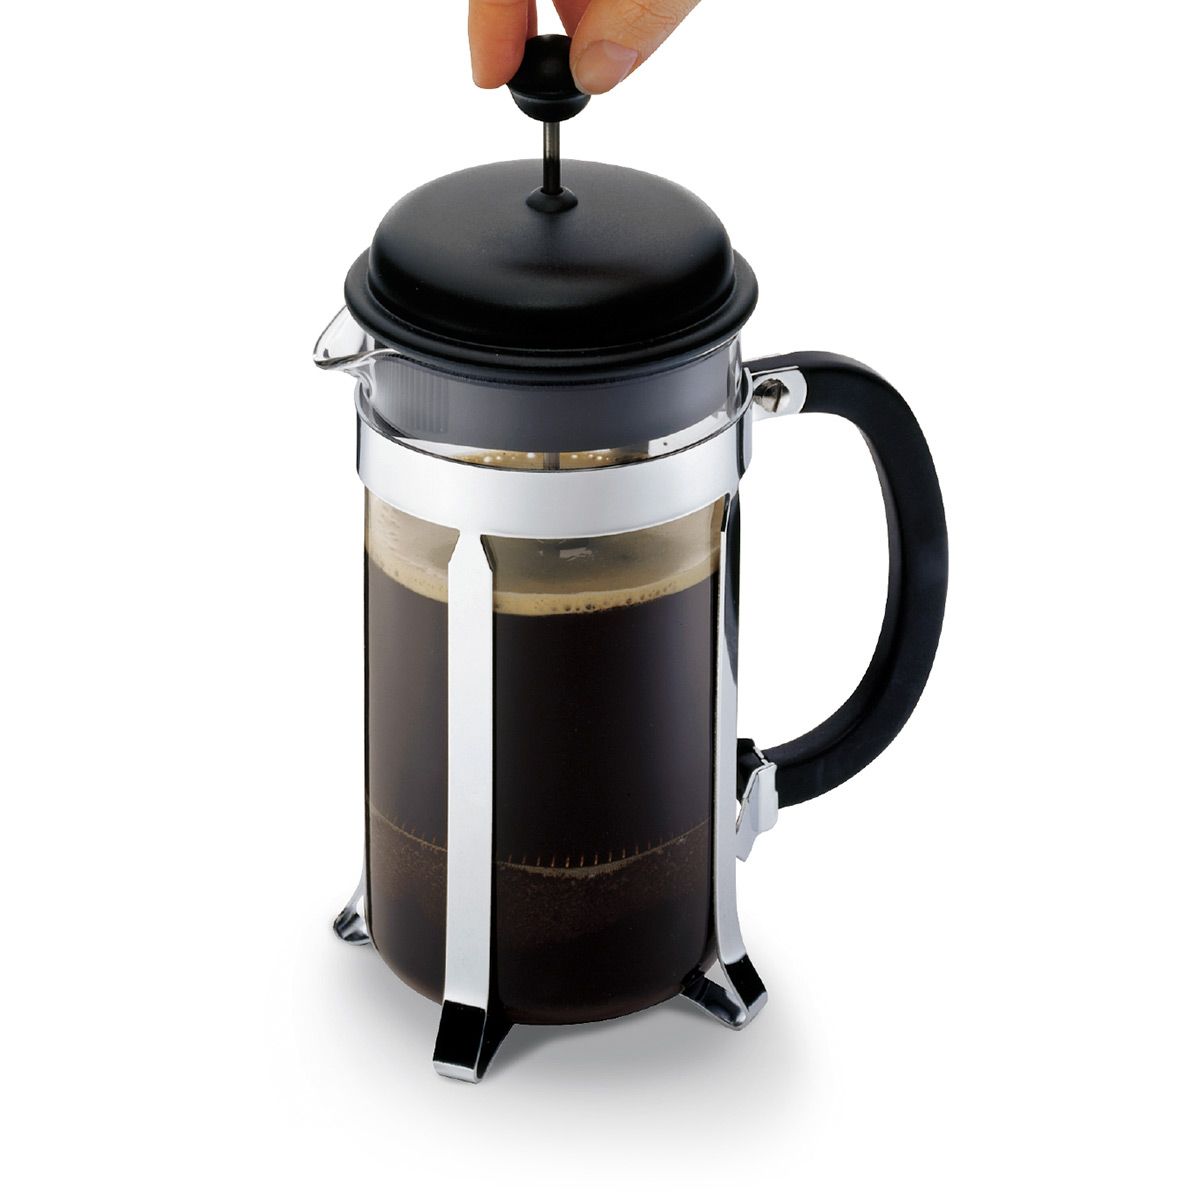 Bodum Caffettiera French Press Coffee maker 8 cup 34oz - Black